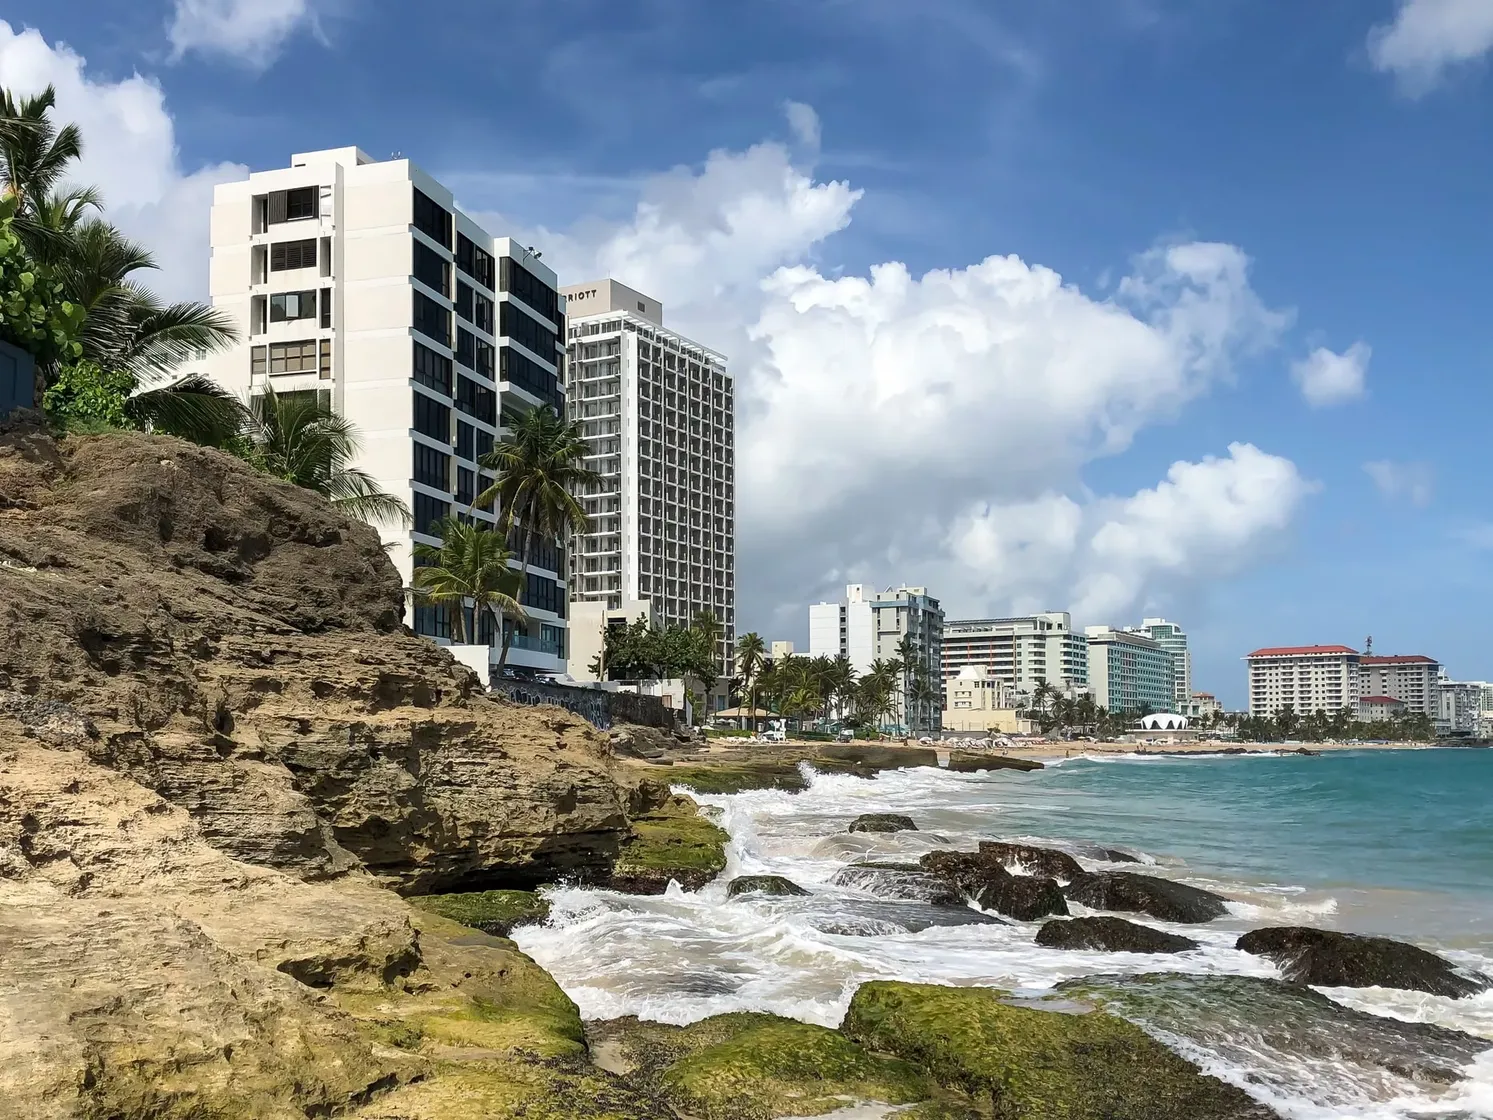 San Juan | Capital Region Region, Puerto Rico - Rated 6.1